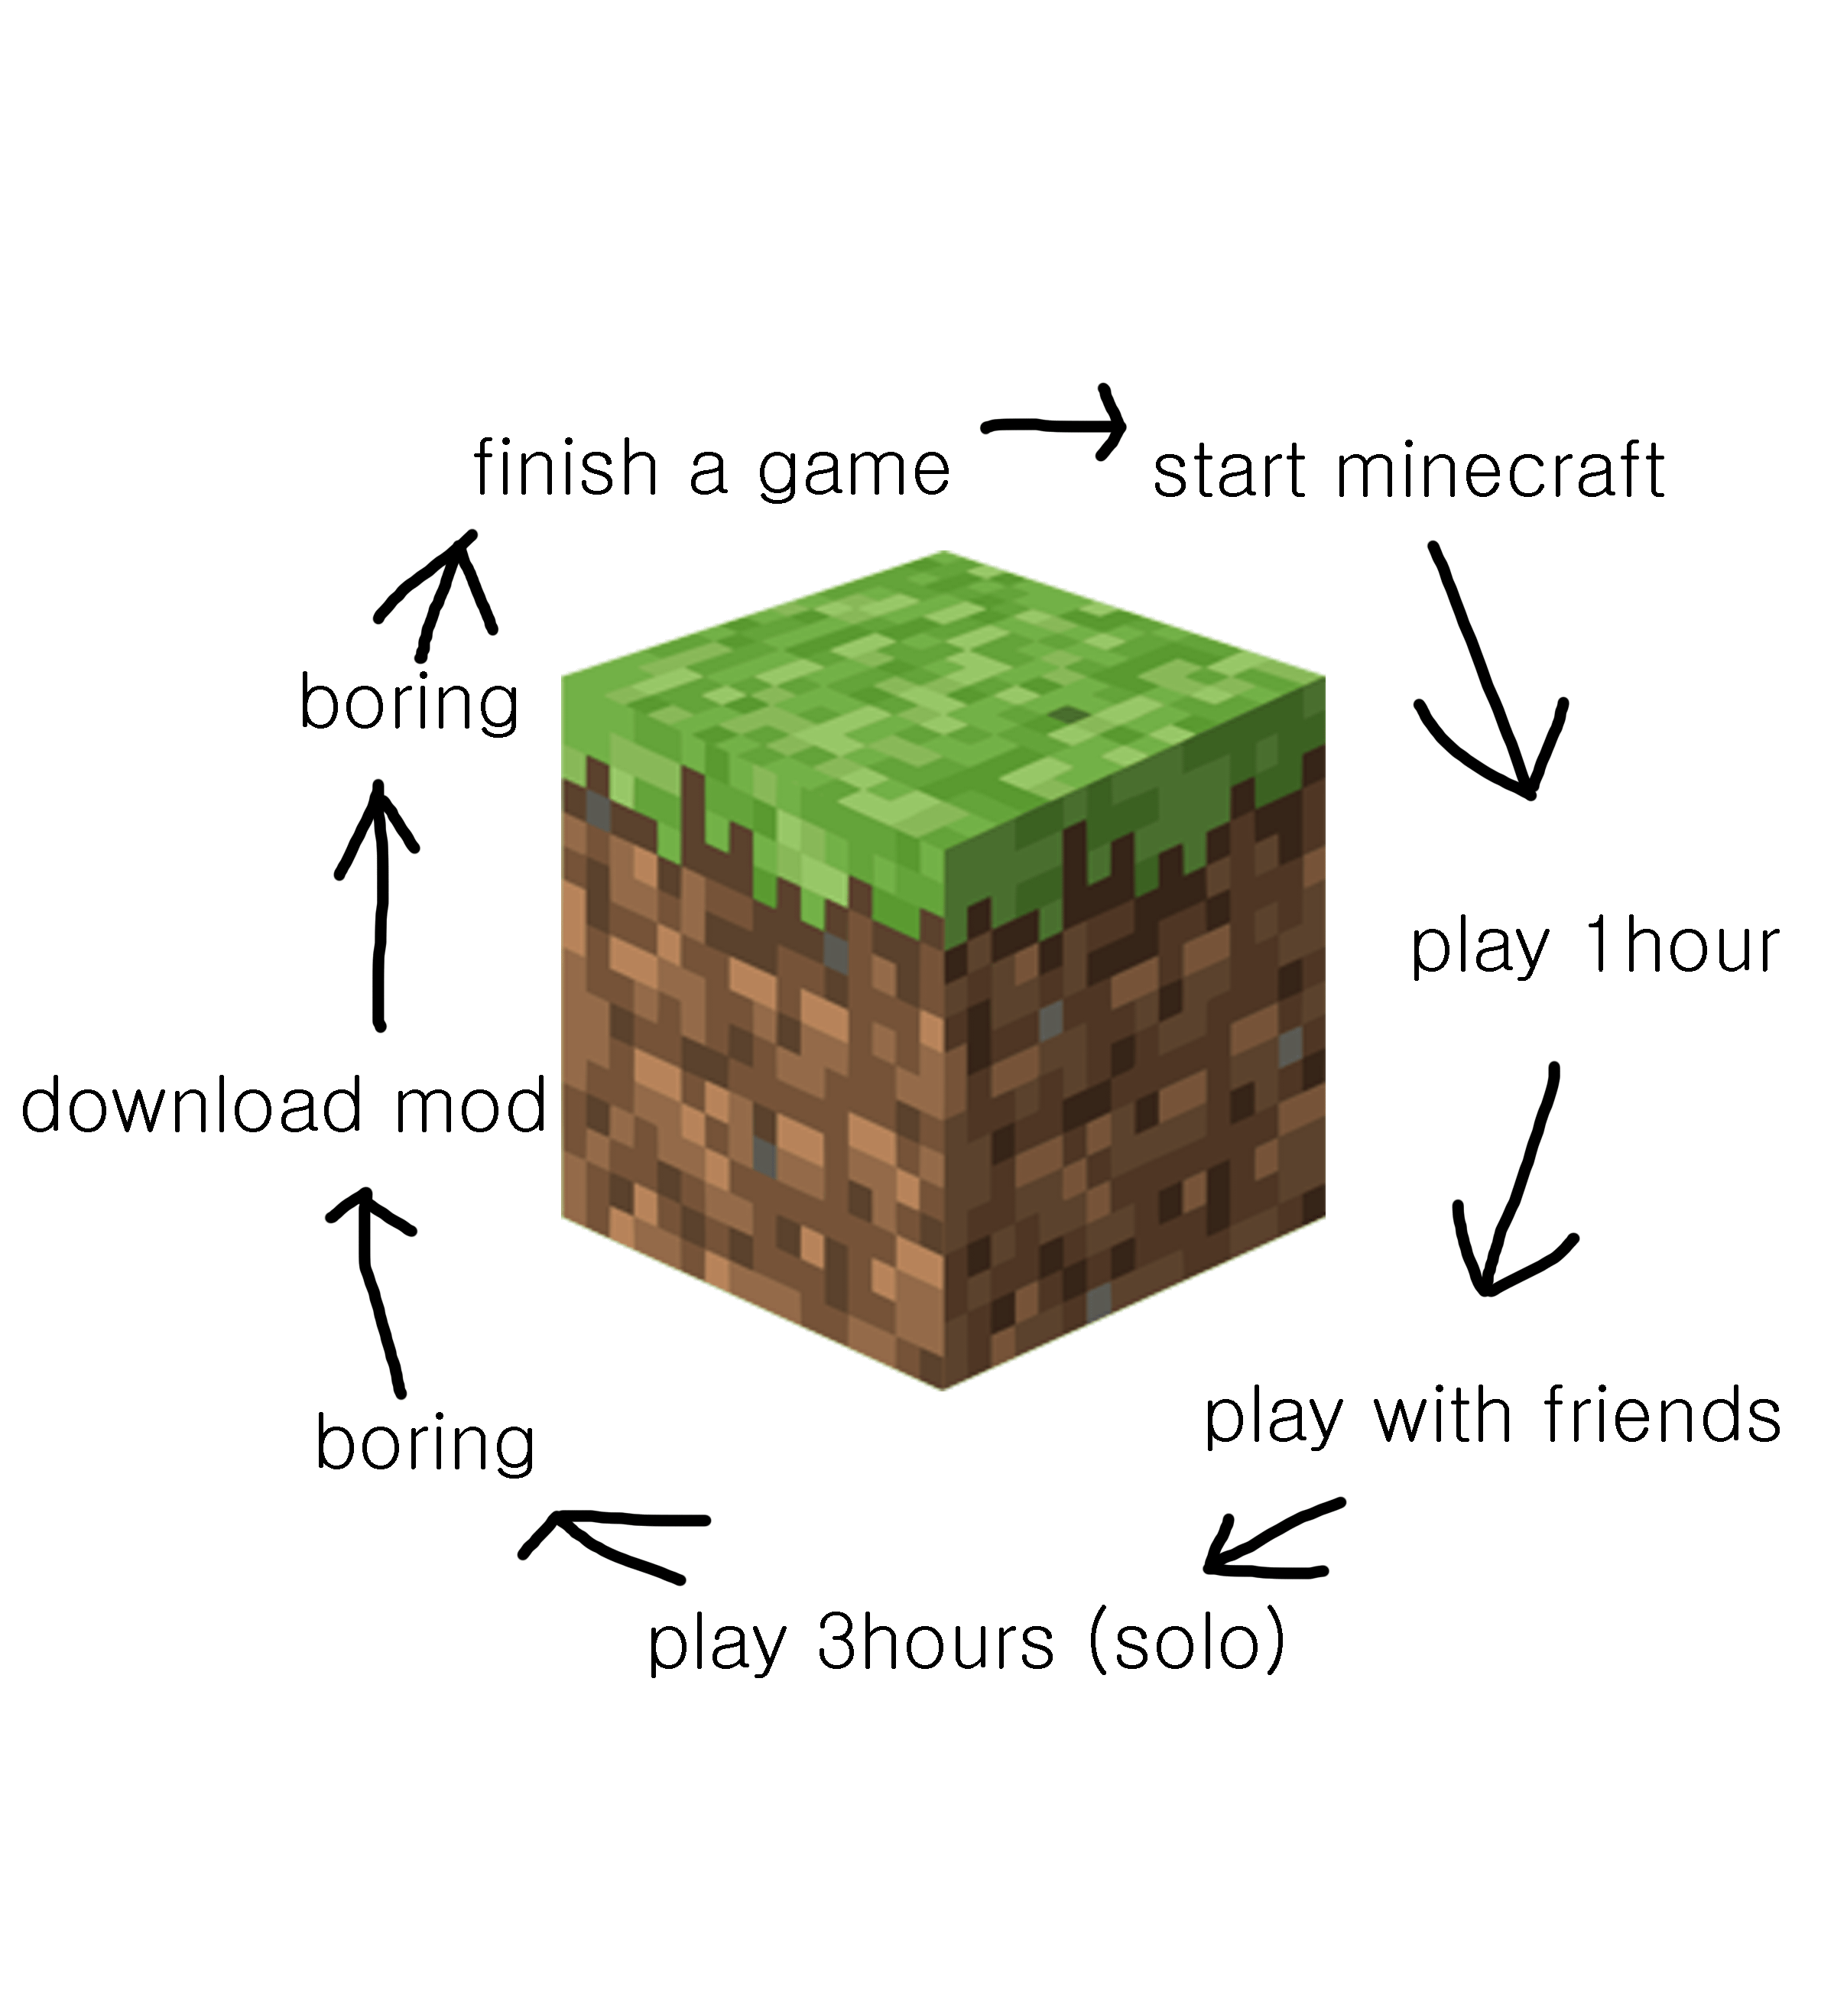 Minecraft Memes - "Blocky Logic: Minecraft"